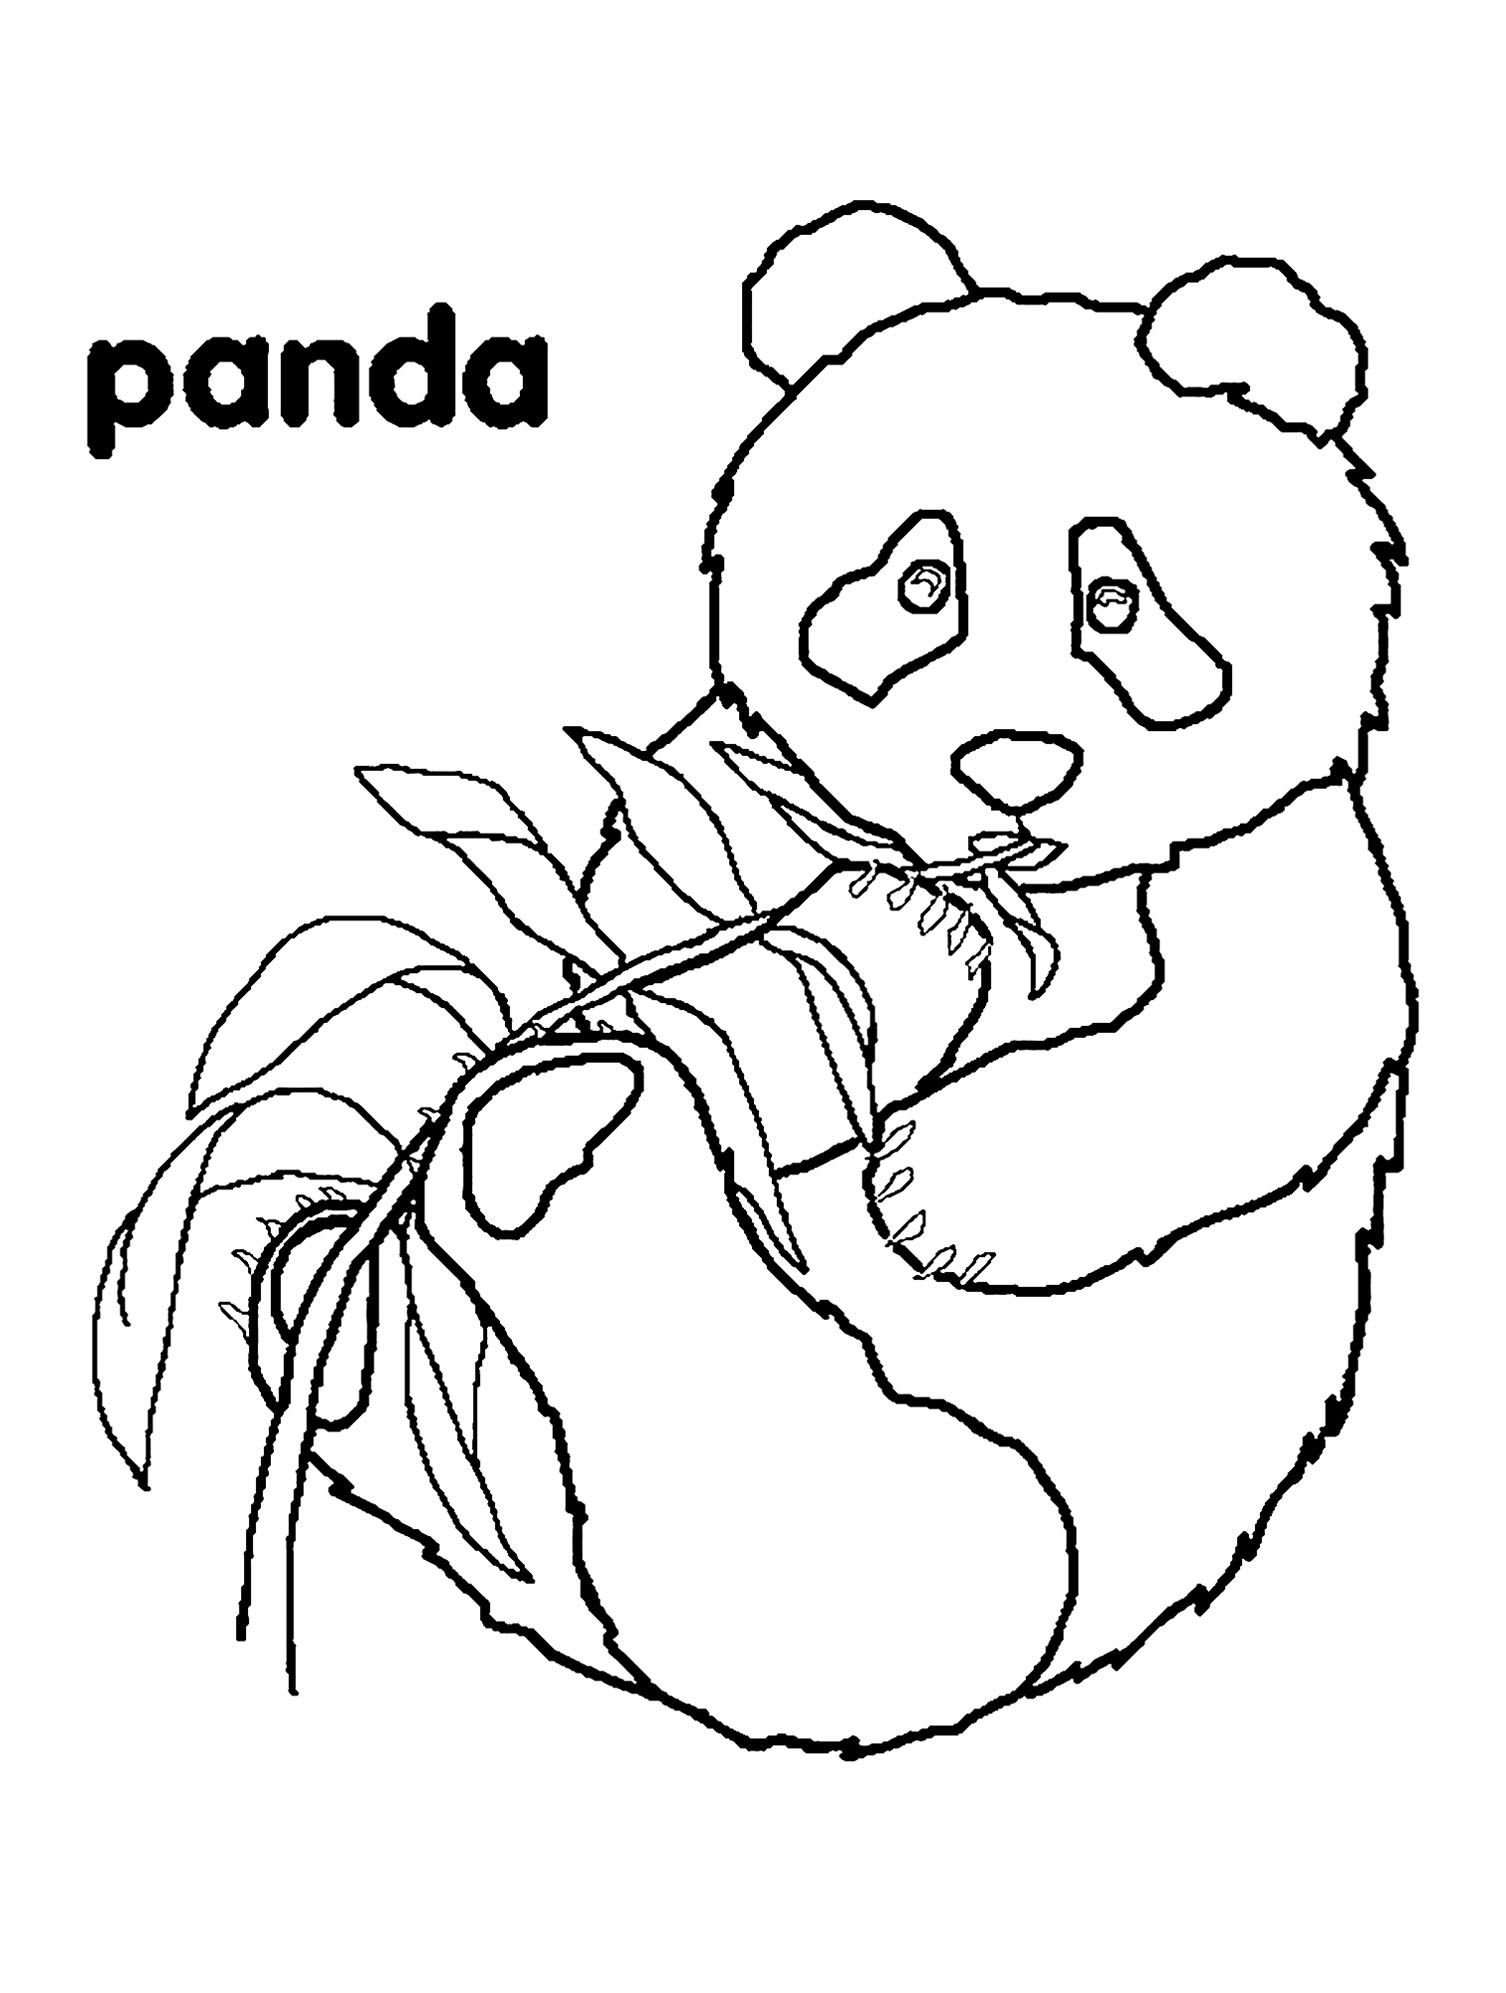 Worksheets Pandas For Children Kids Coloring Printable PrintableMultiplication